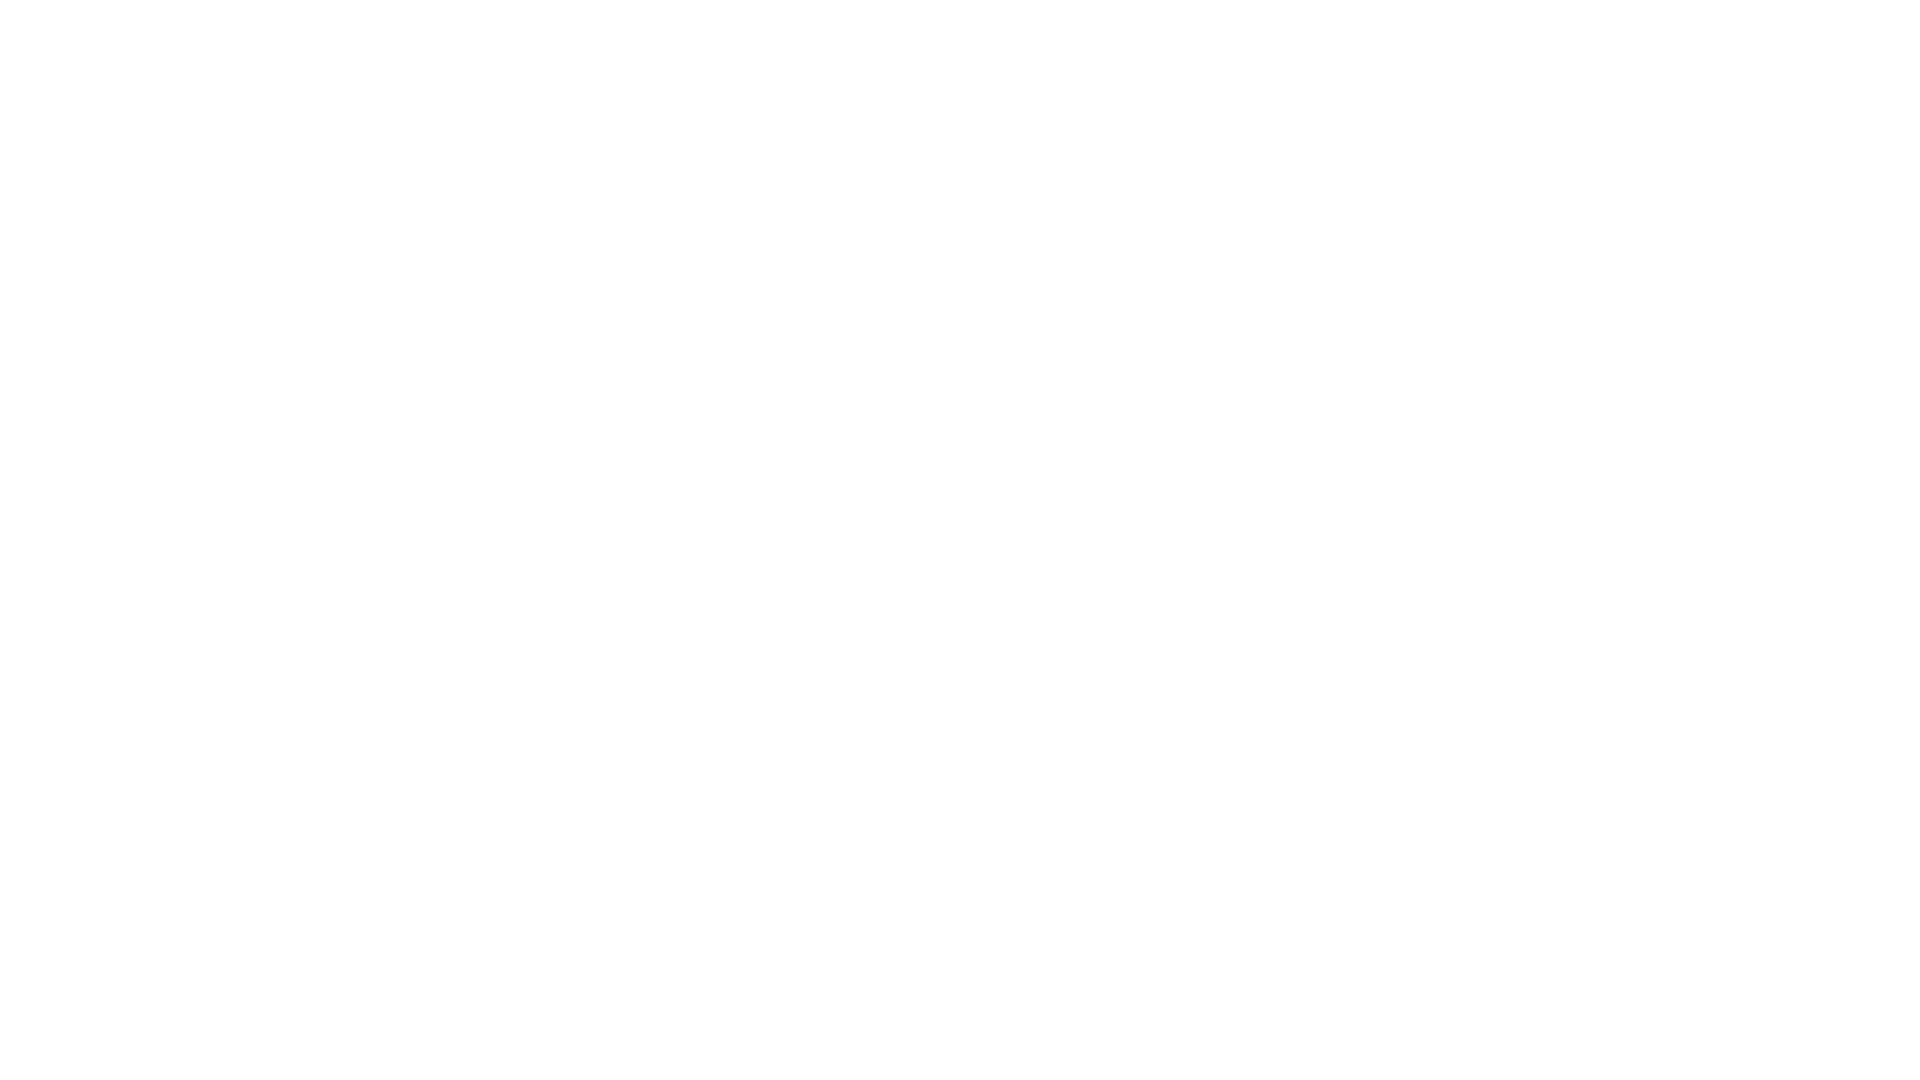 The Black Mental Health Corporation Logo